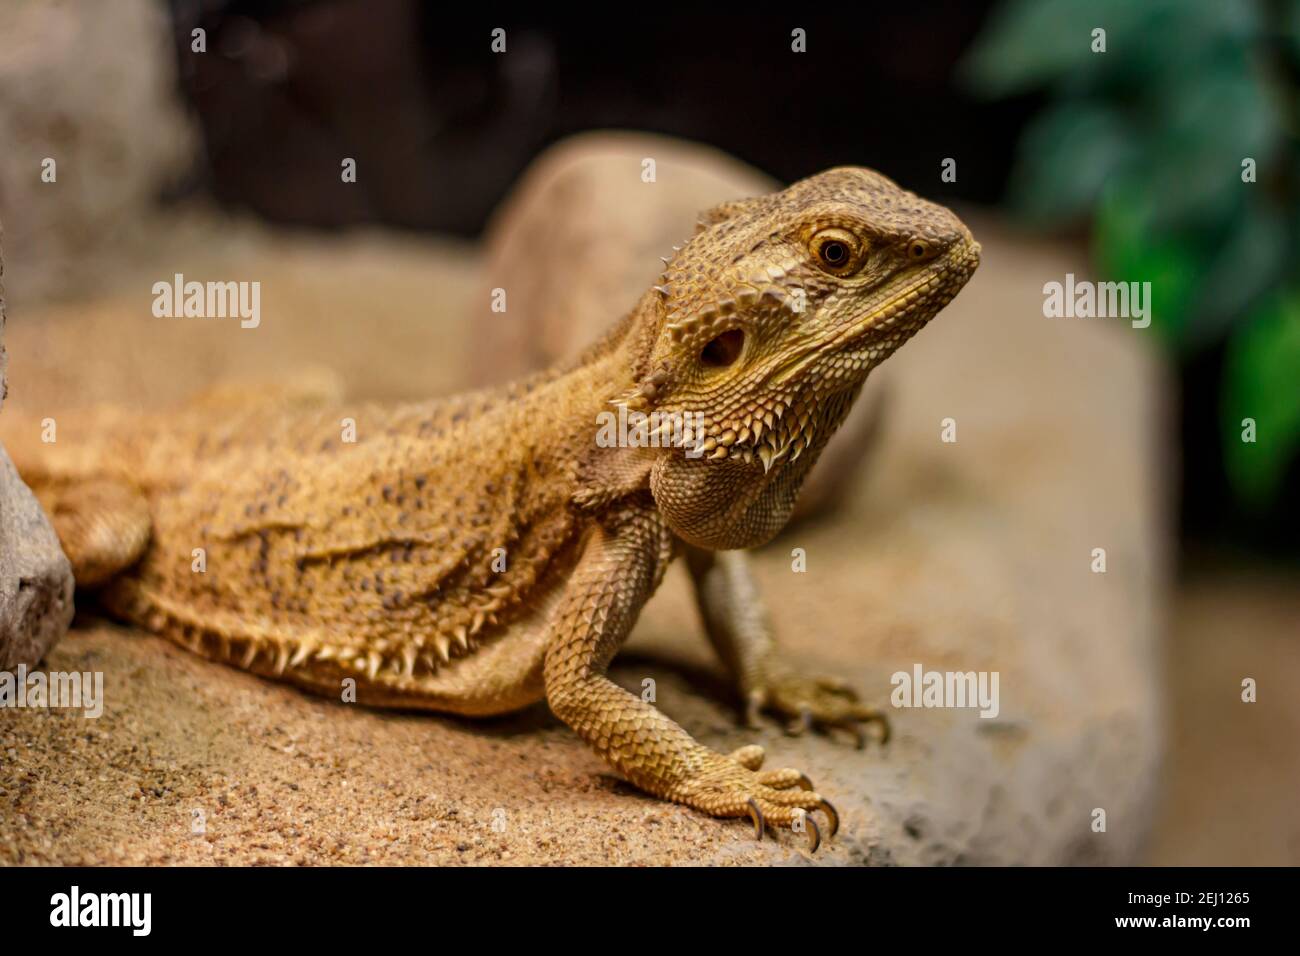 A close-up of a central bearded dragon (Pogona vitticeps) sitting on a sandy rock in captivity. Stock Photo